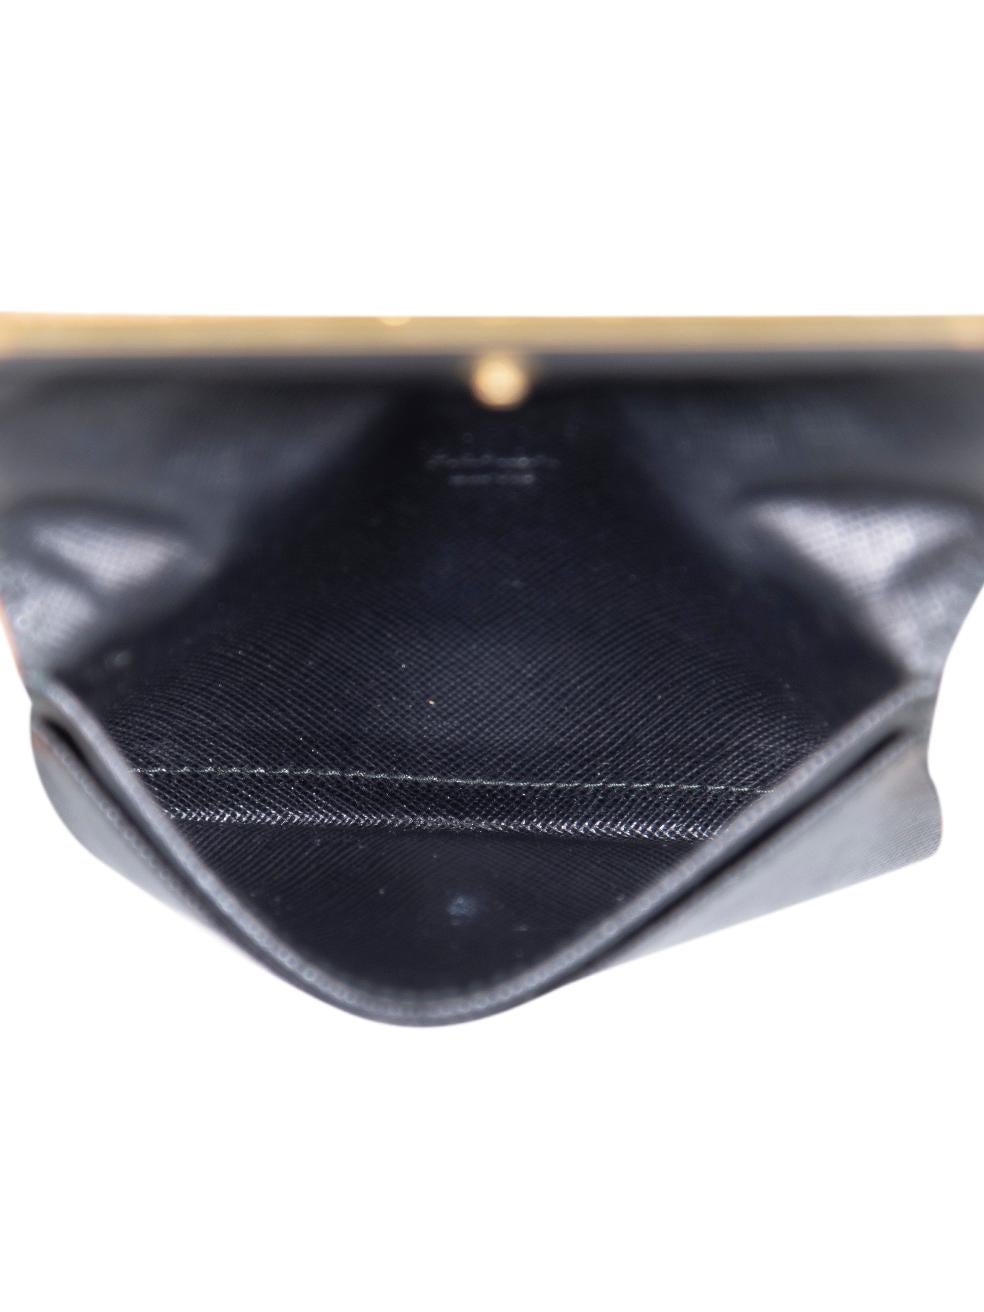 Prada Black Saffiano Leather Folded Cardholder For Sale 1